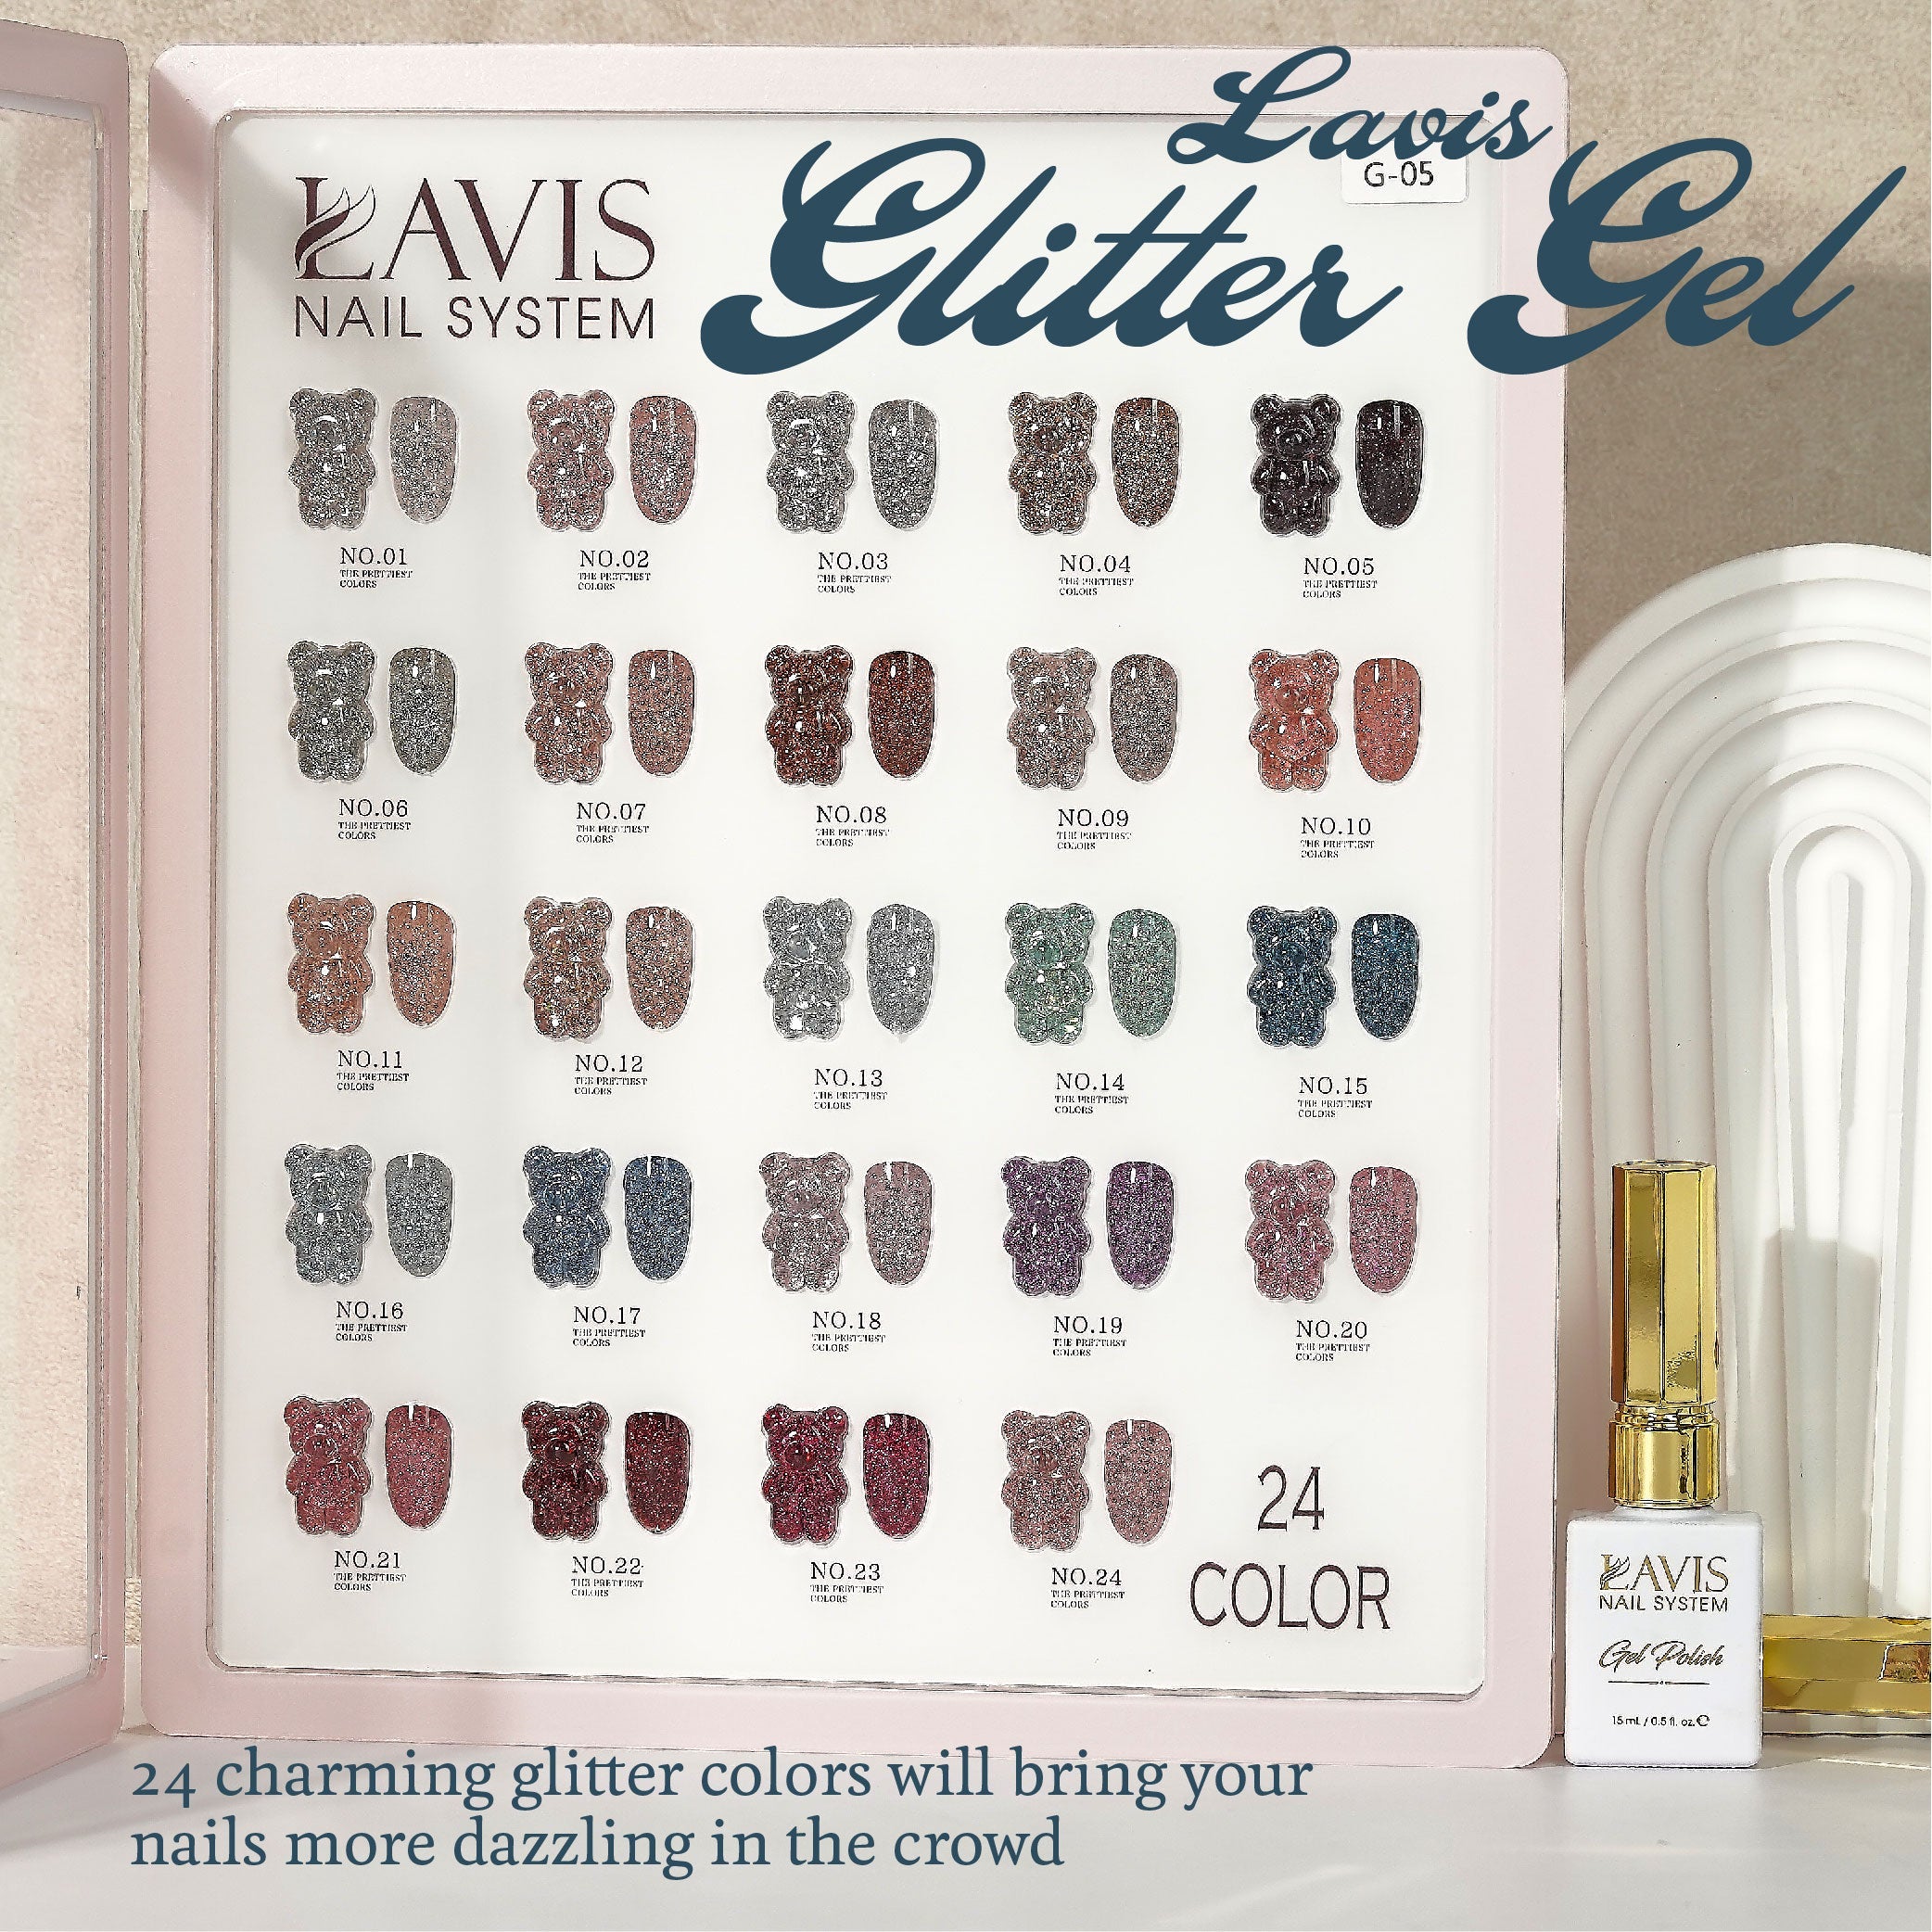 LAVIS Glitter G05 - 19 - Gel Polish 0.5oz - Champagne Toast Glitter Collection